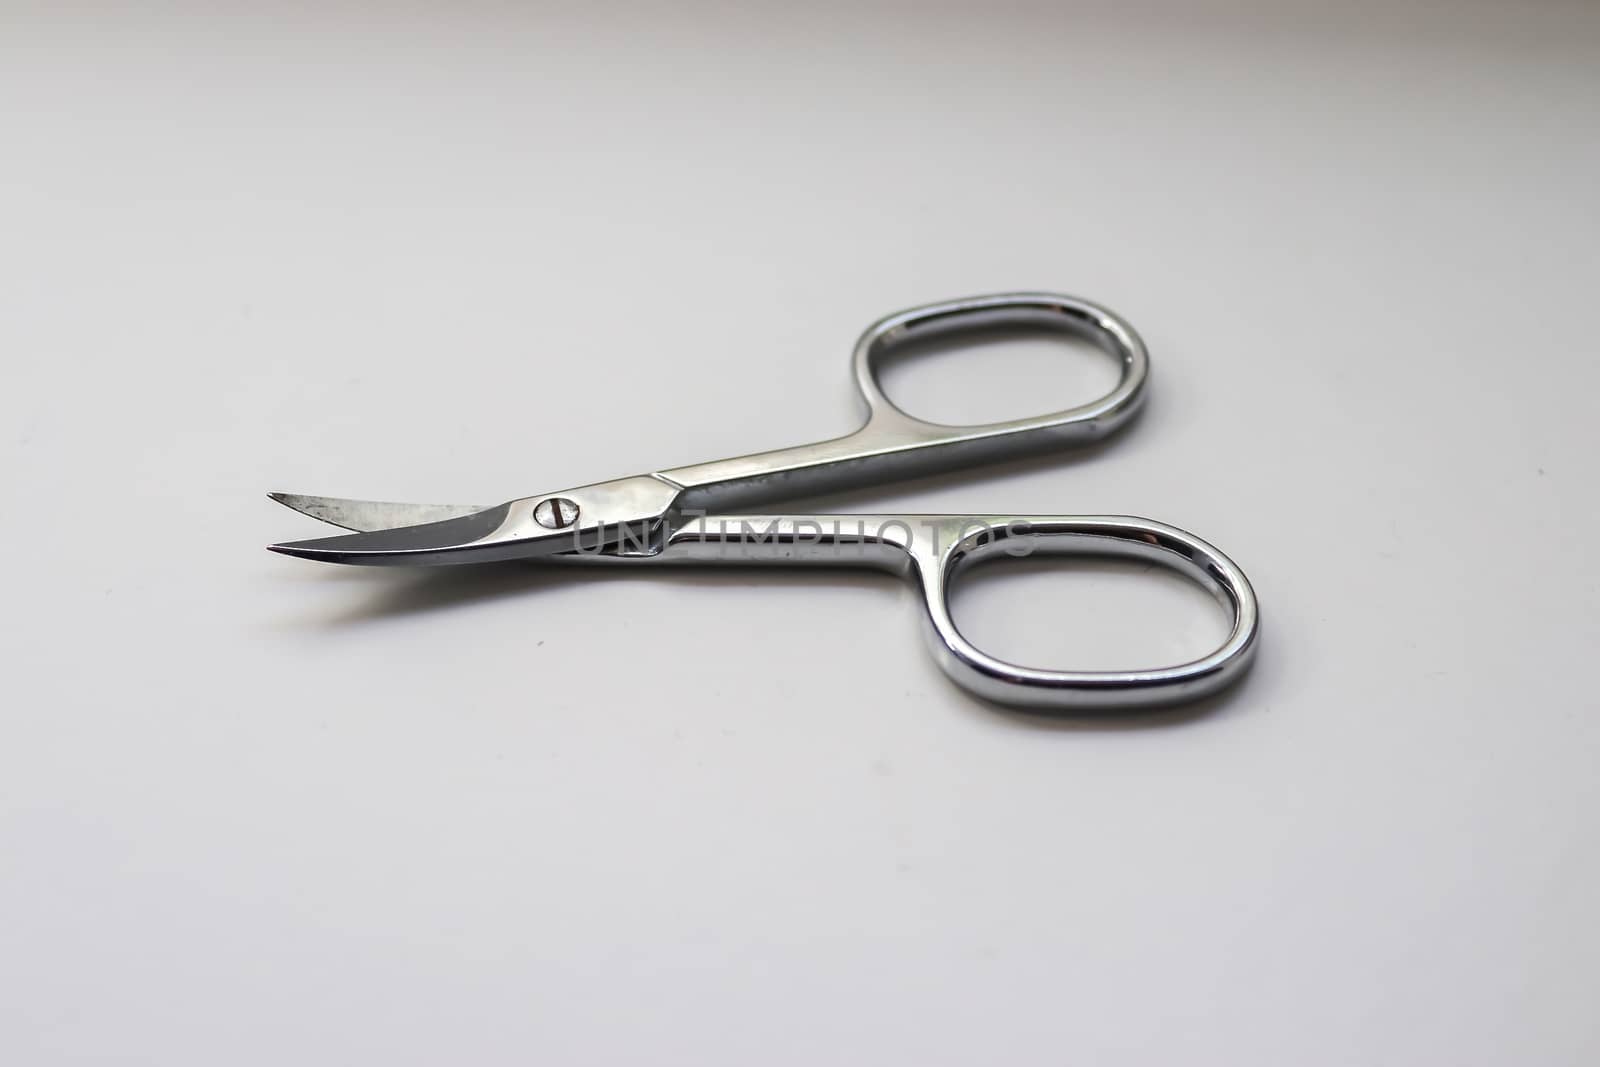 Manicure scissors closeup on white background